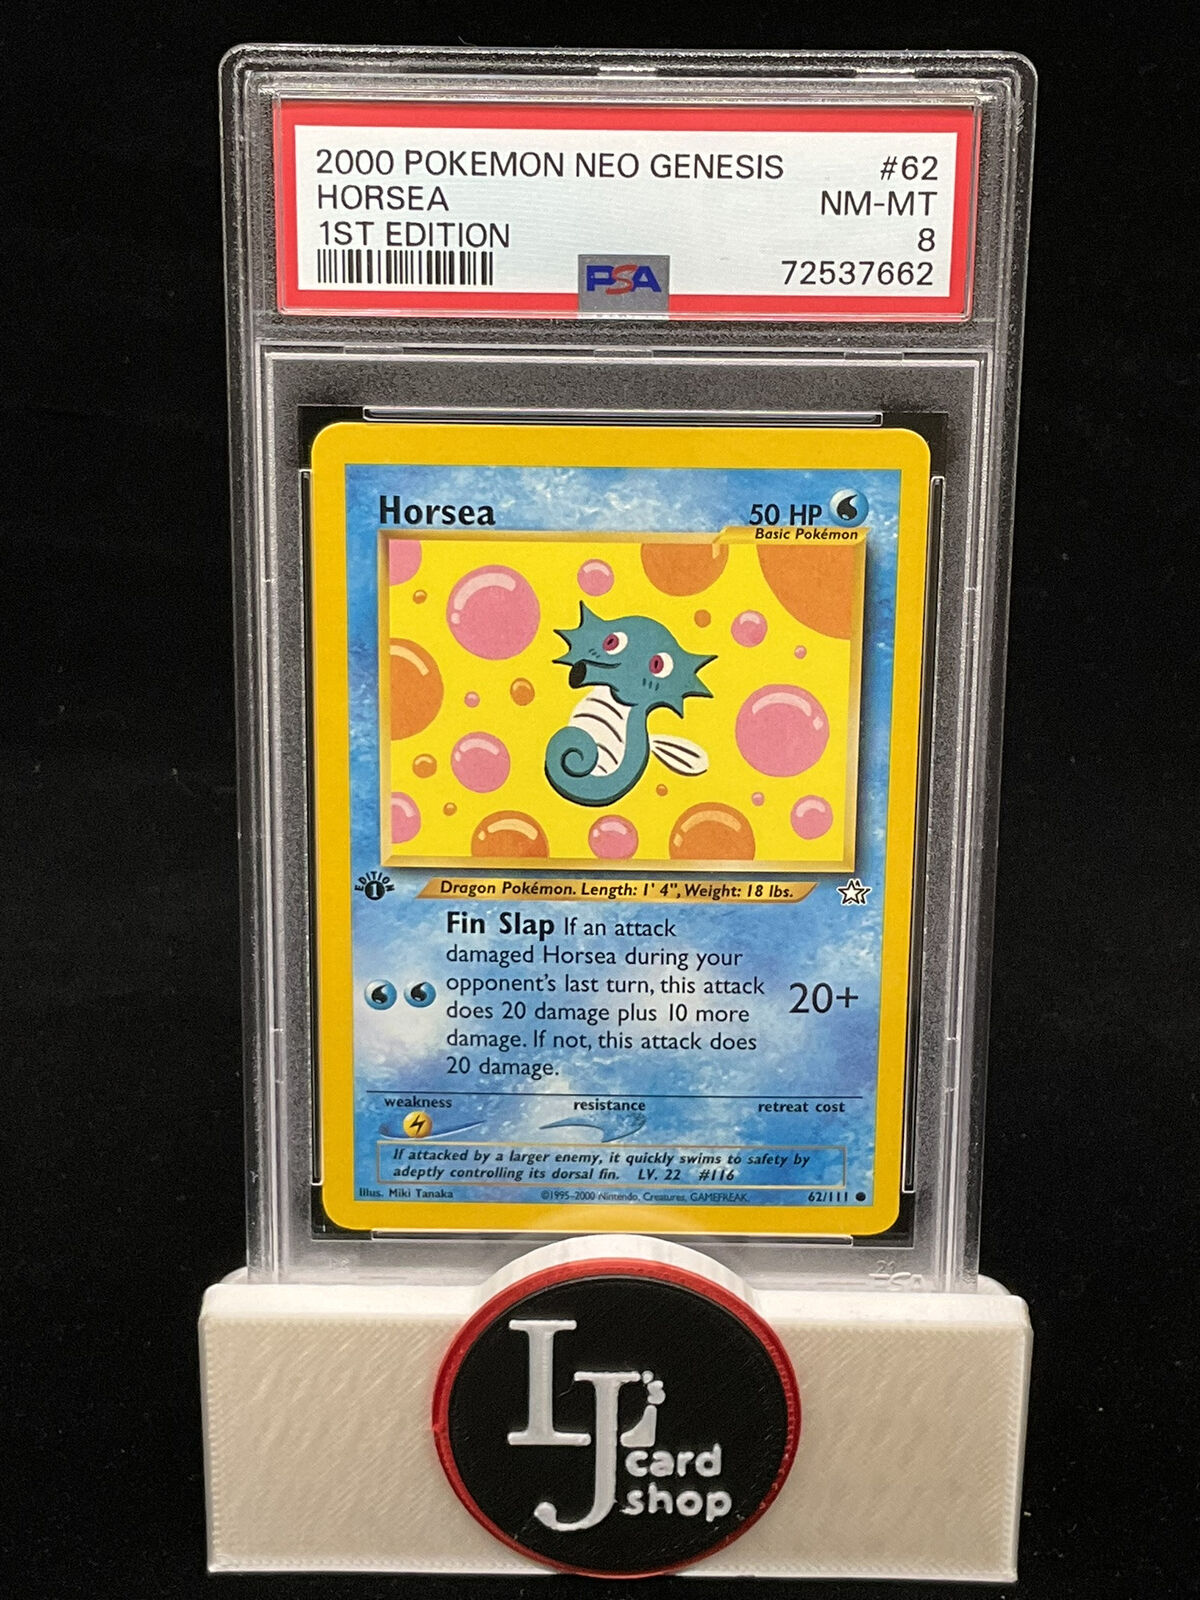 2000 Pokémon Neo Genesis Horsea #62 1st Edition PSA 8 NM-MT 7662 CJC